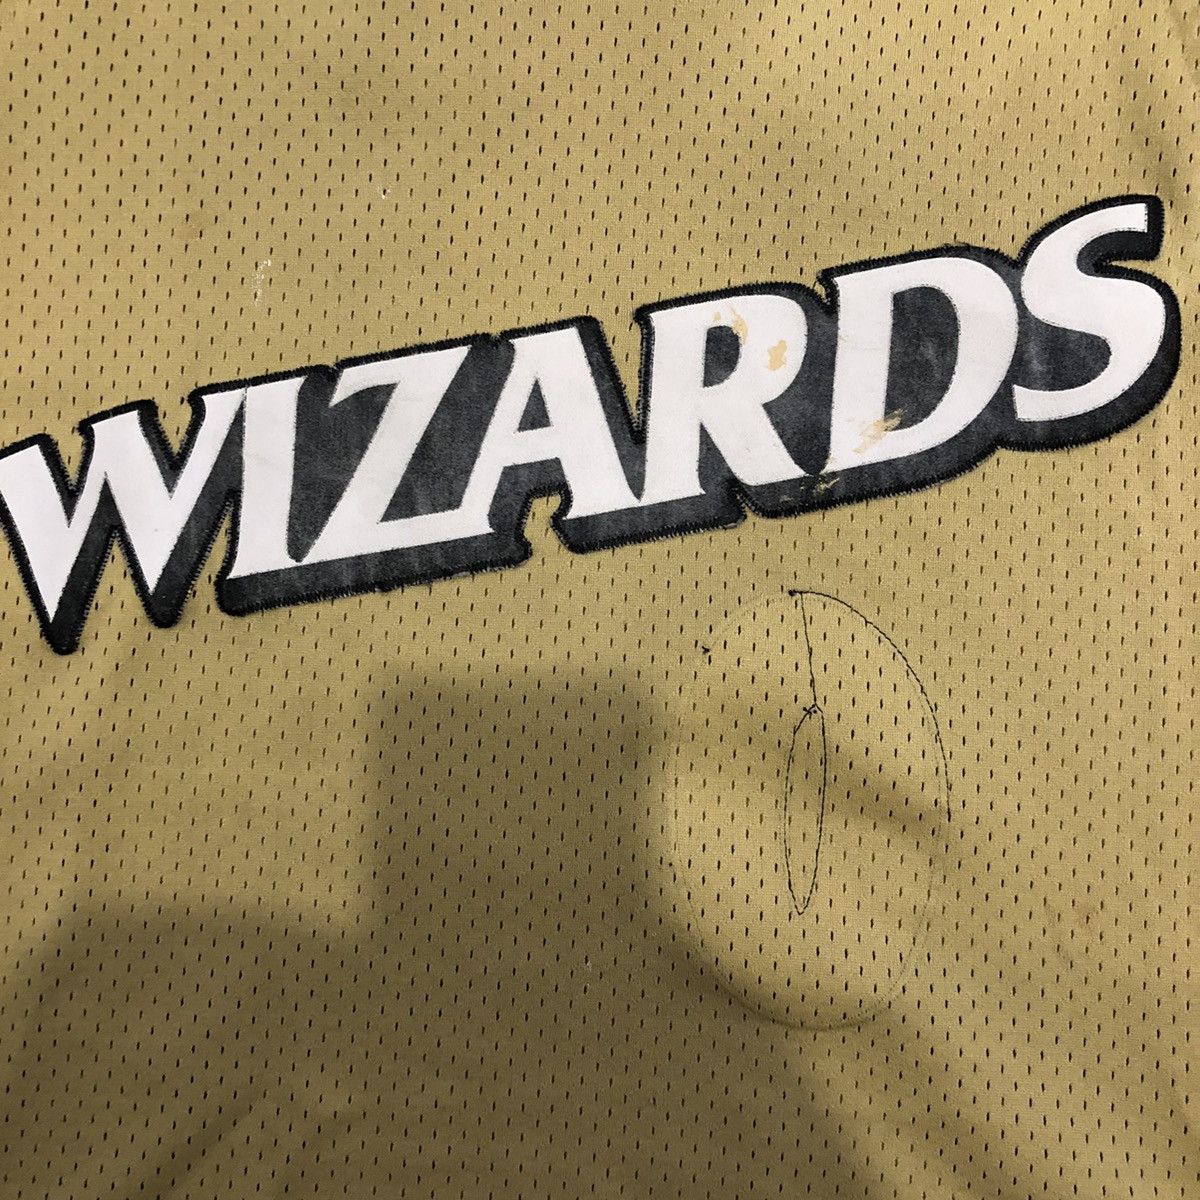 Adidas Vintage Adidas Gilbert Arenas Washington Wizards NBA Jersey Size US M / EU 48-50 / 2 - 5 Thumbnail